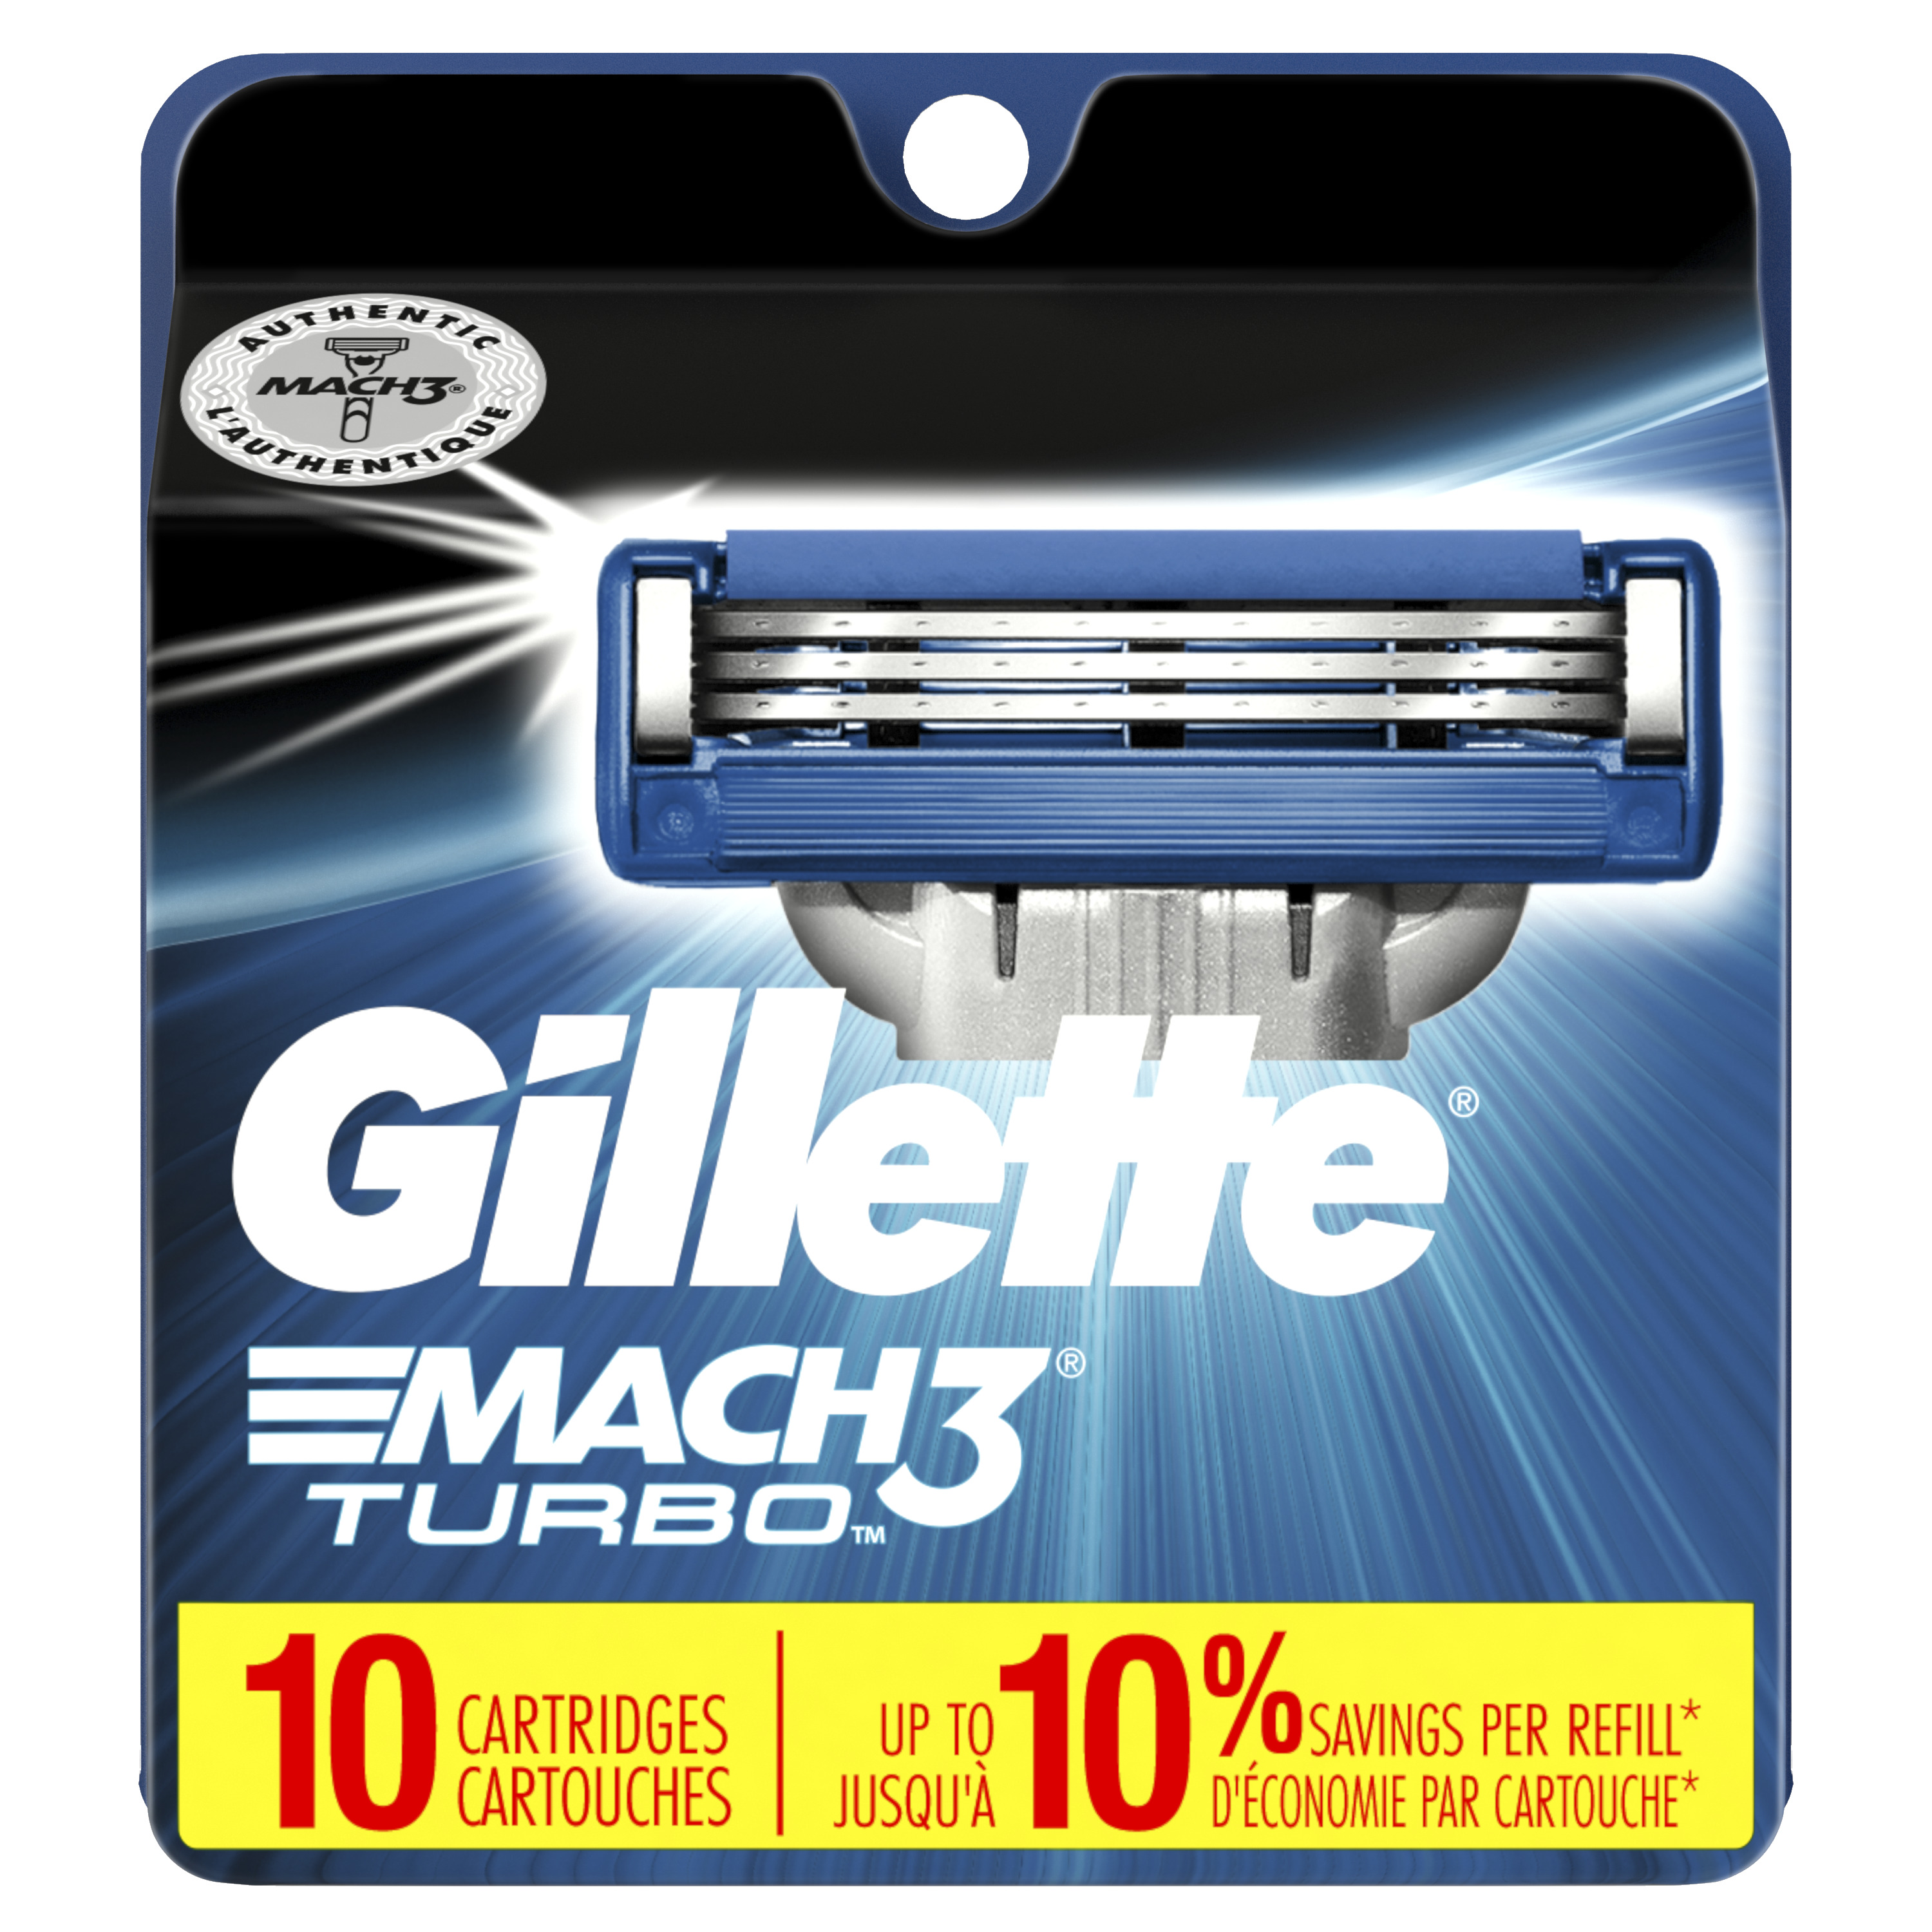 Gillette Mach3 Turbo Mens Razor Blade Refill Cartridges, 10 ct - image 1 of 9